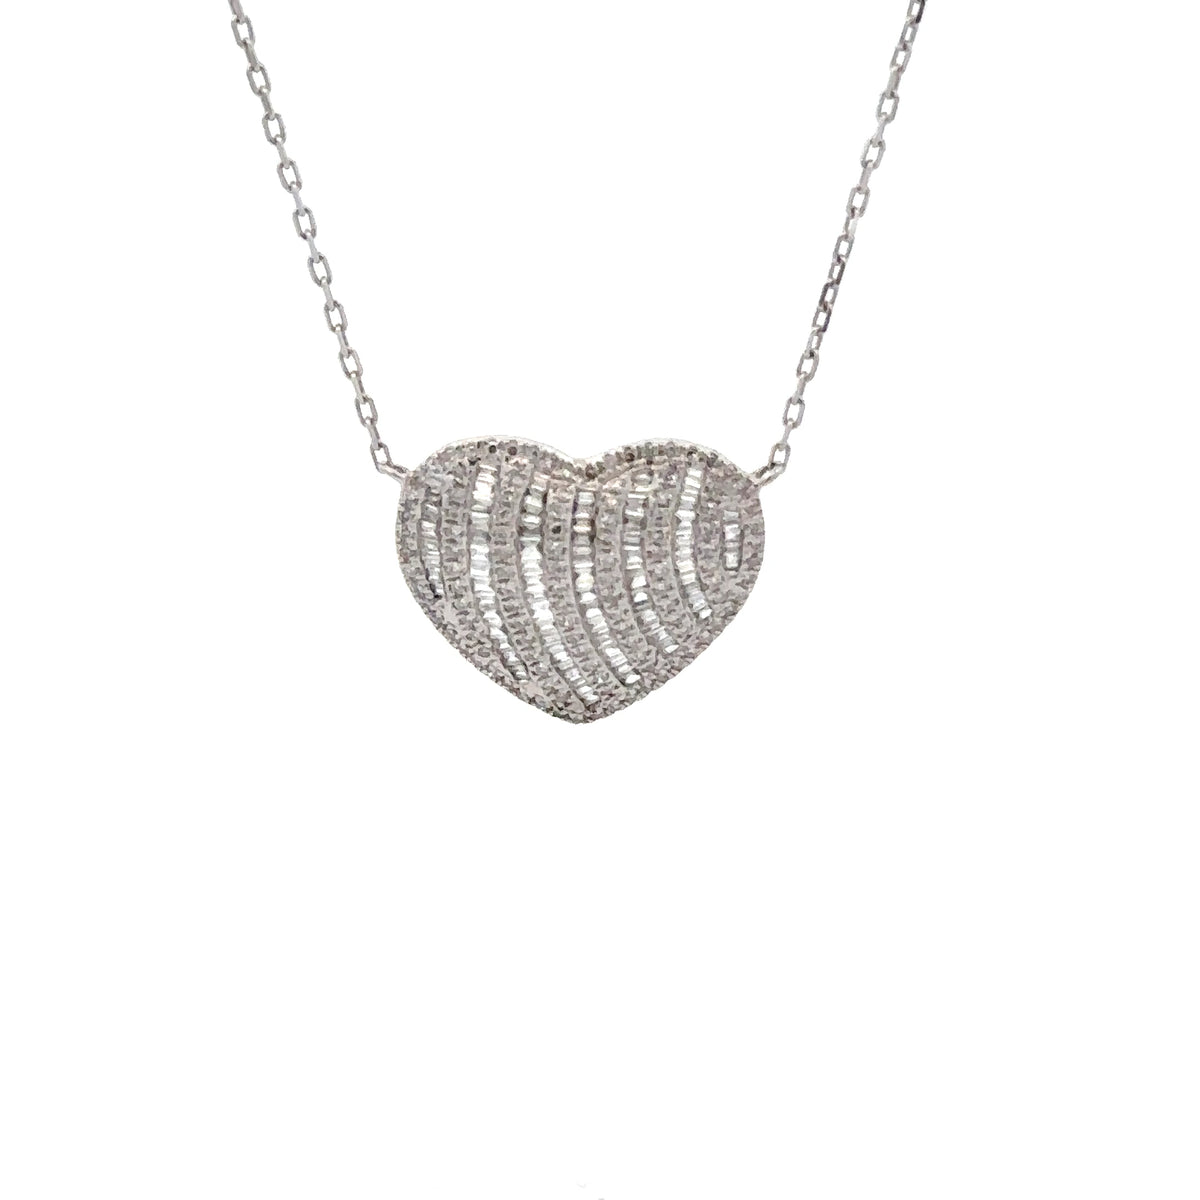 Delicate Love: 14K White Gold Heart Pendant Necklace